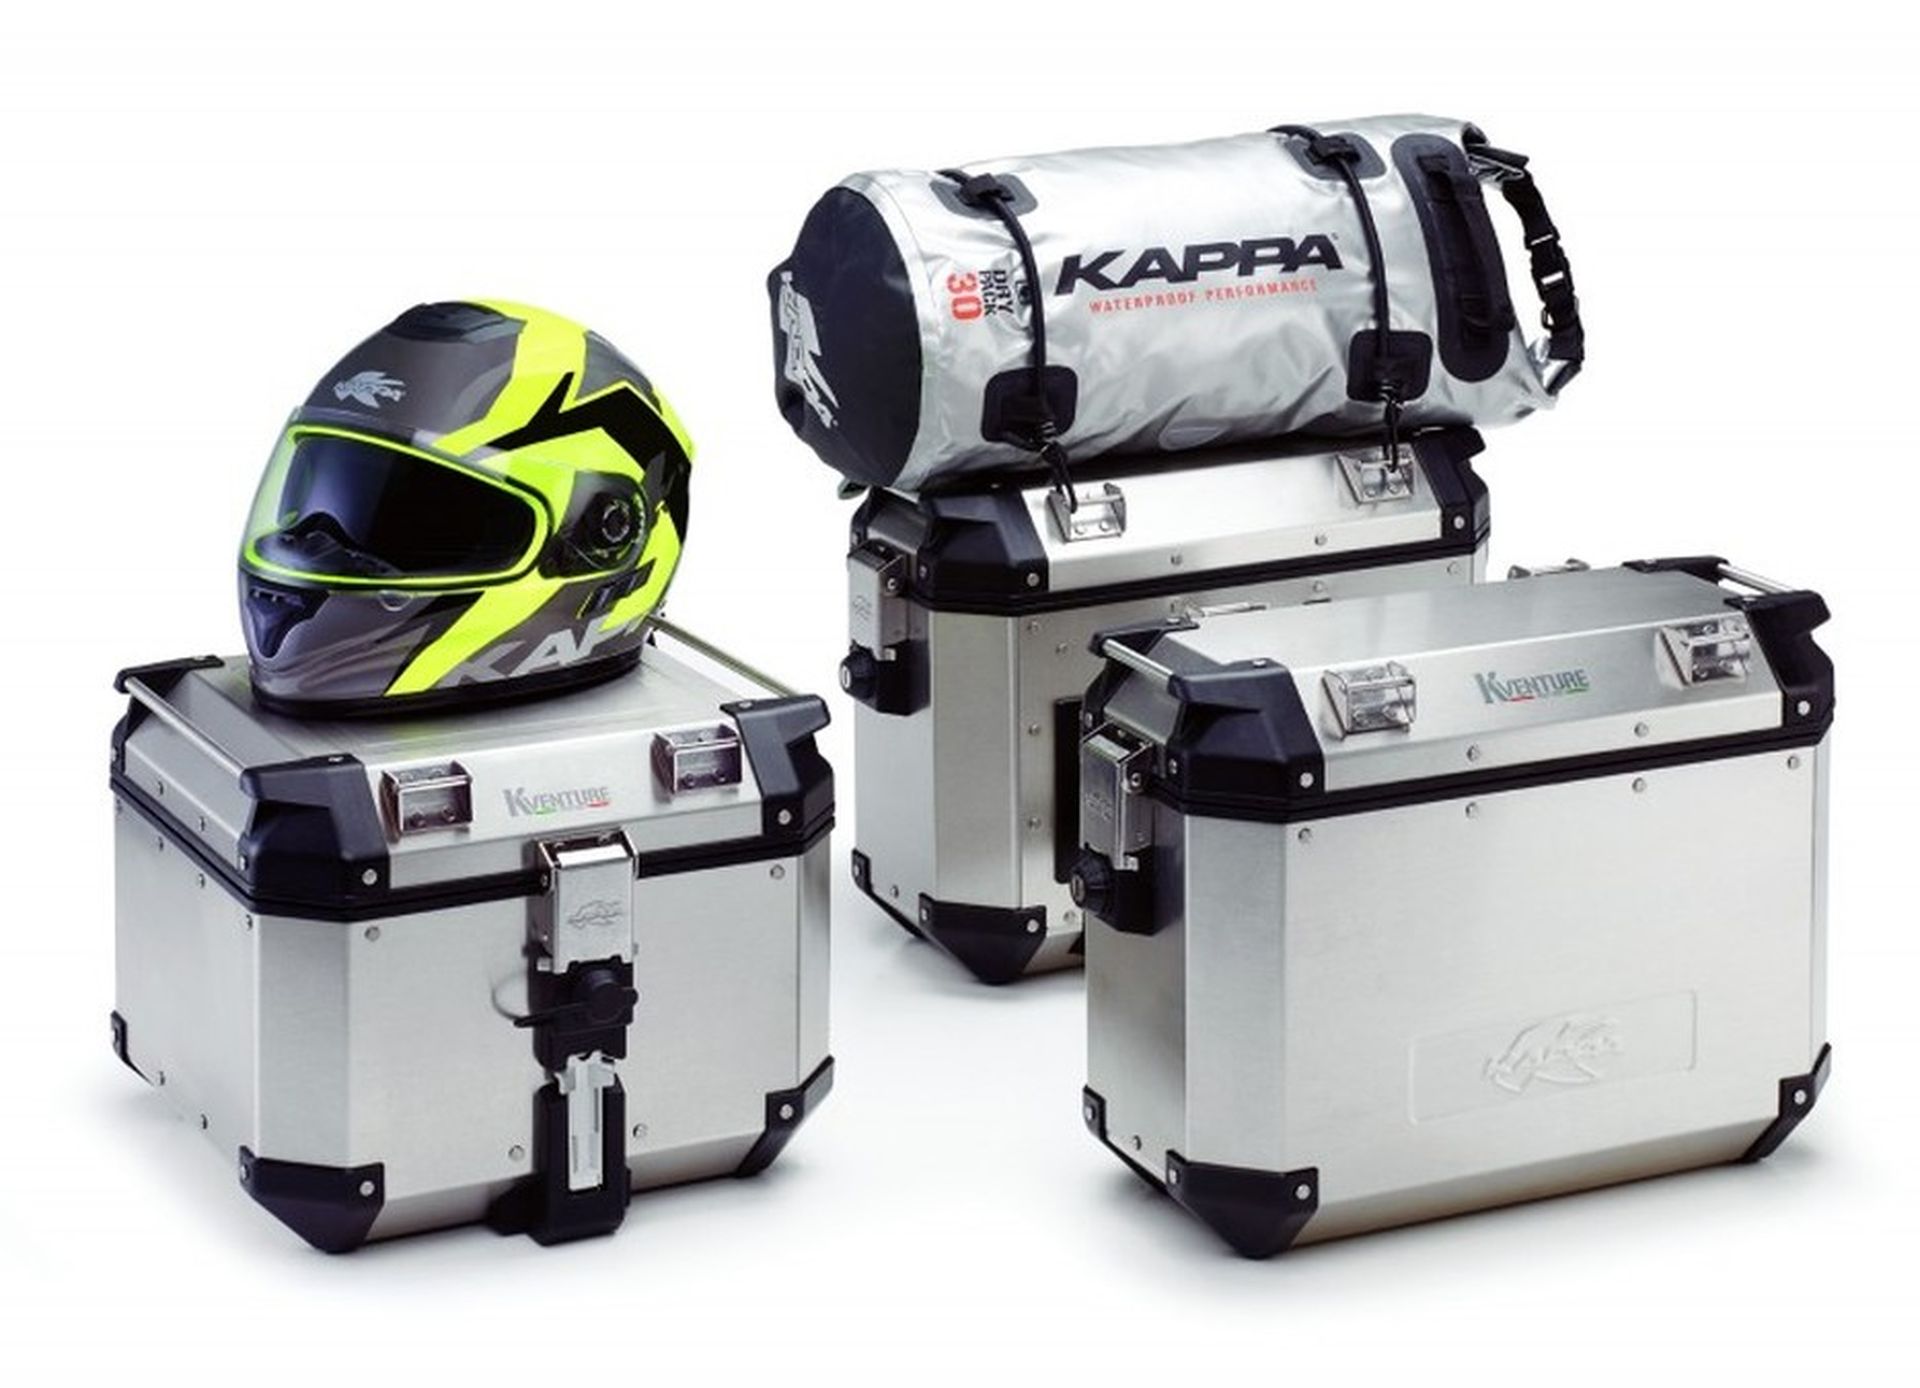 Maletas para moto - Kappa Moto